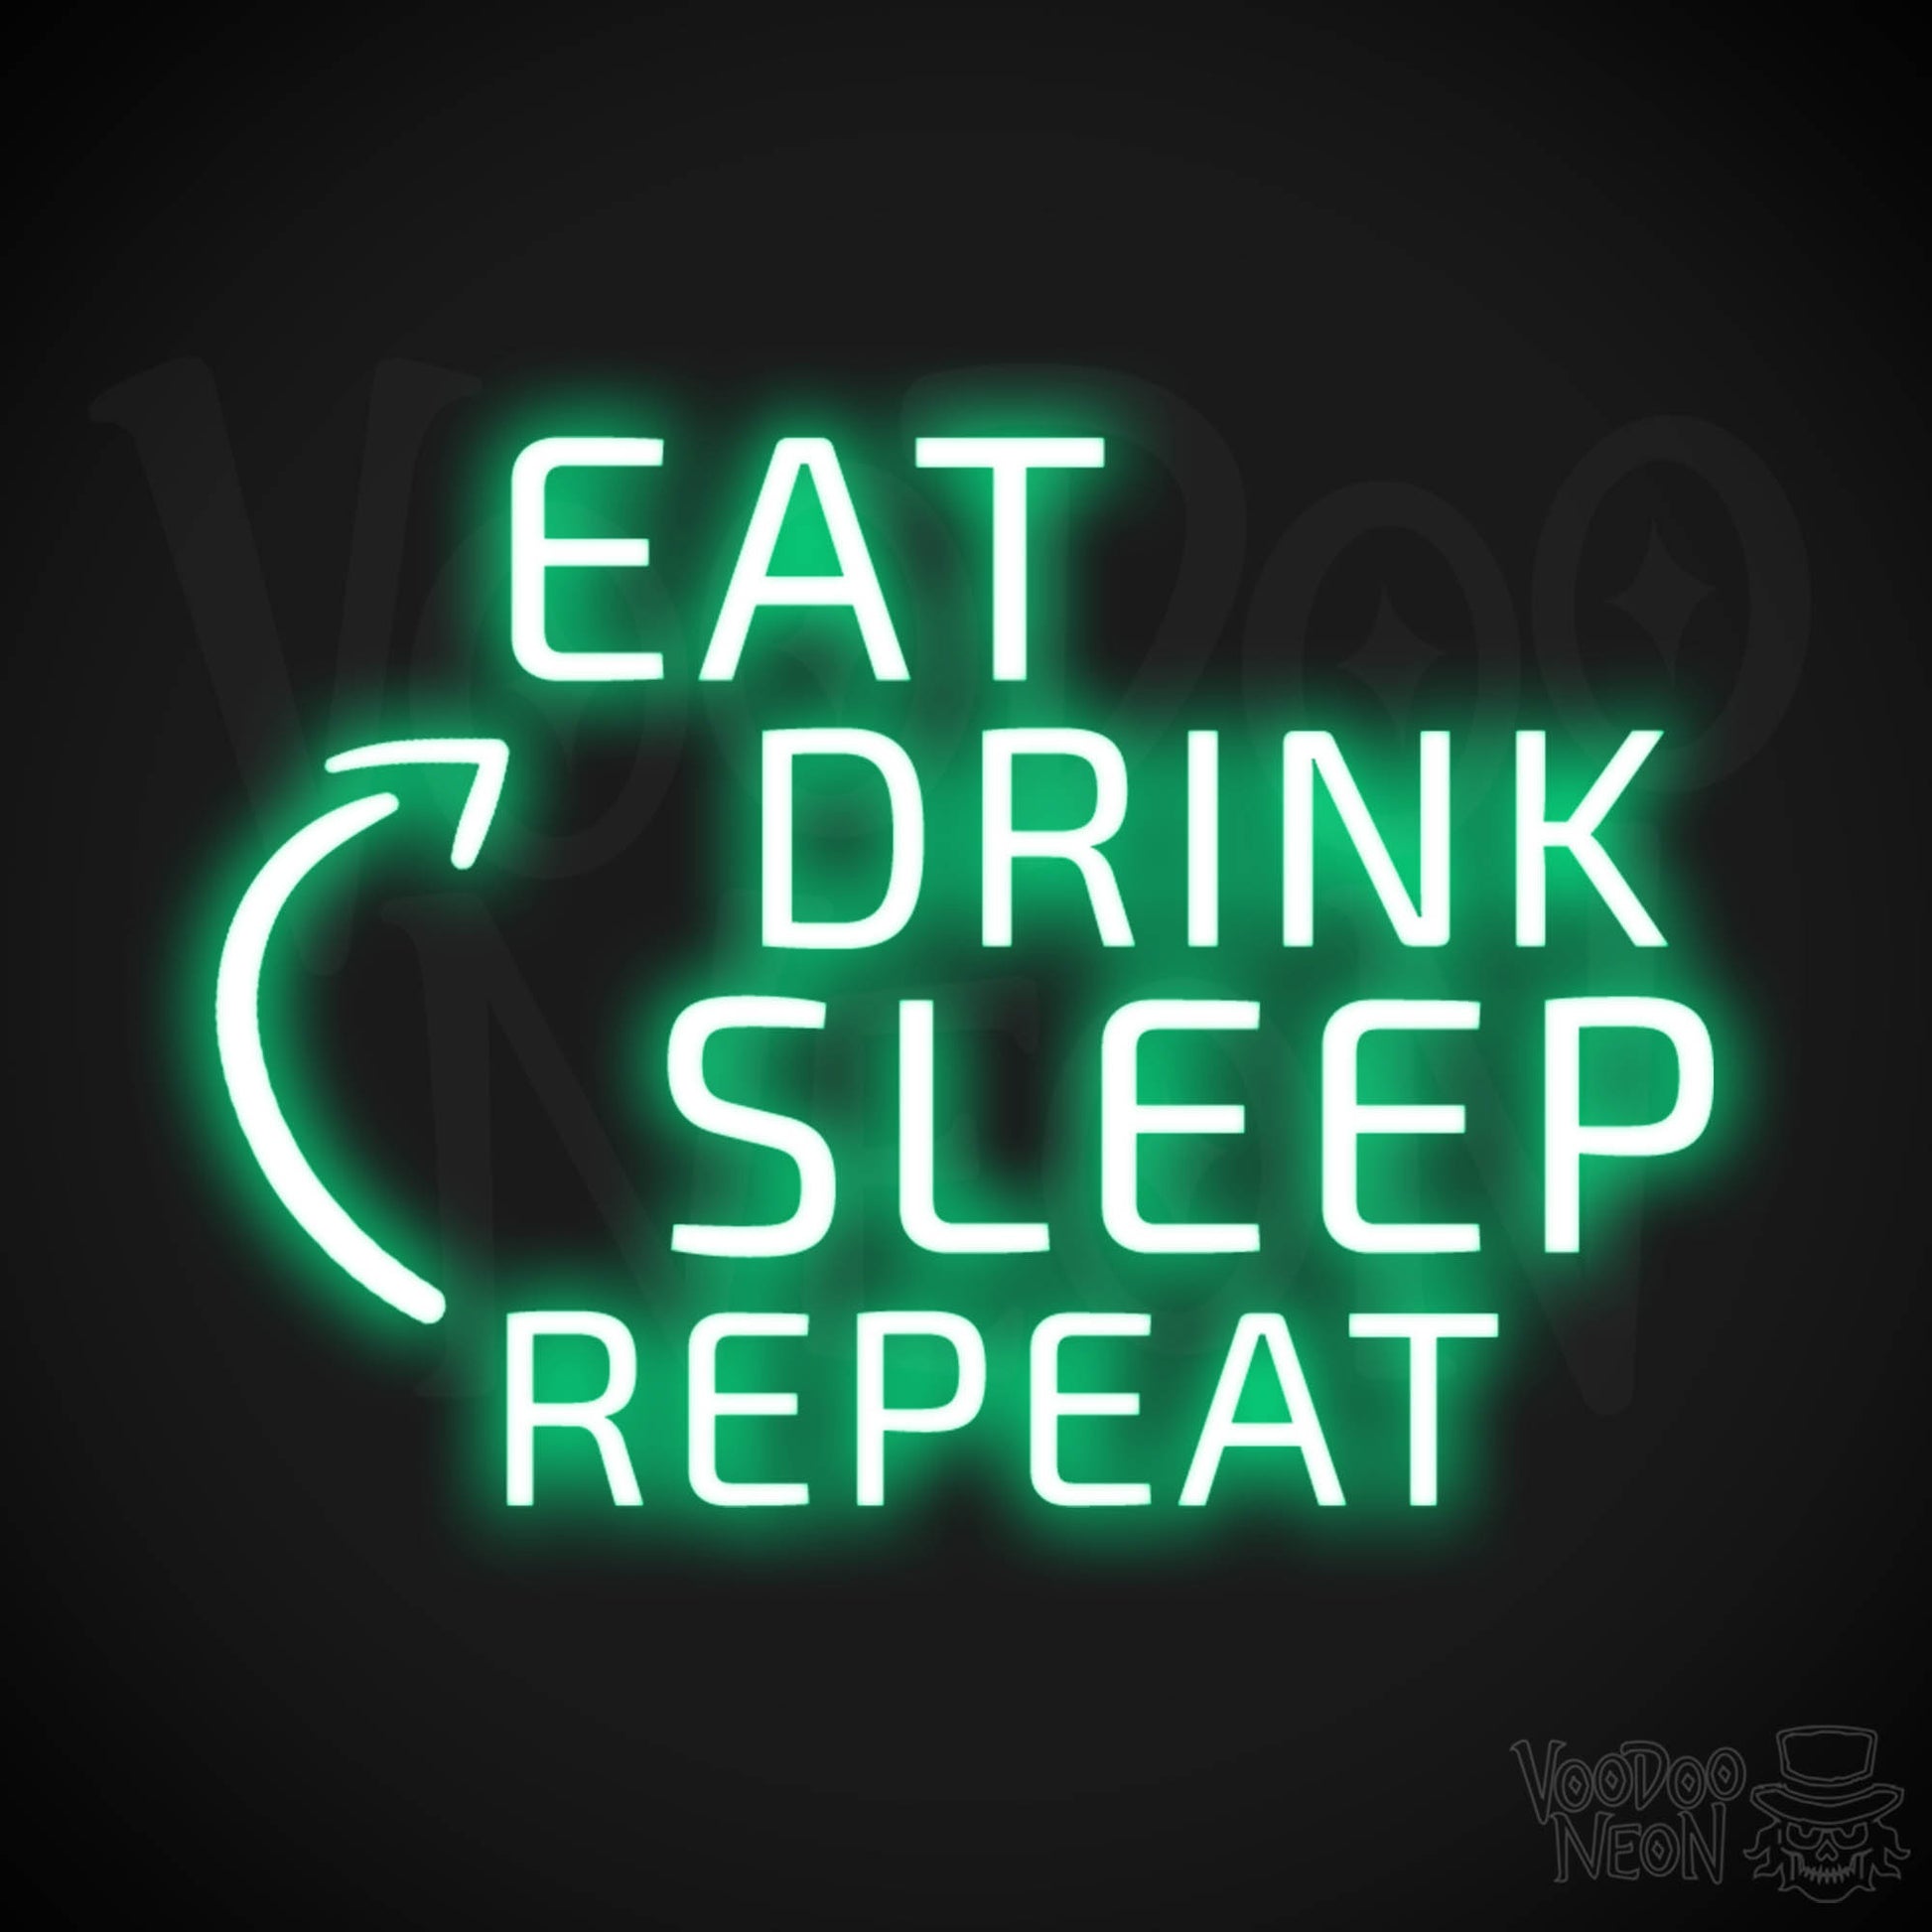 Eat Drink Sleep Repeat Neon Sign - Eat Drink Sleep Repeat Sign - Color Green